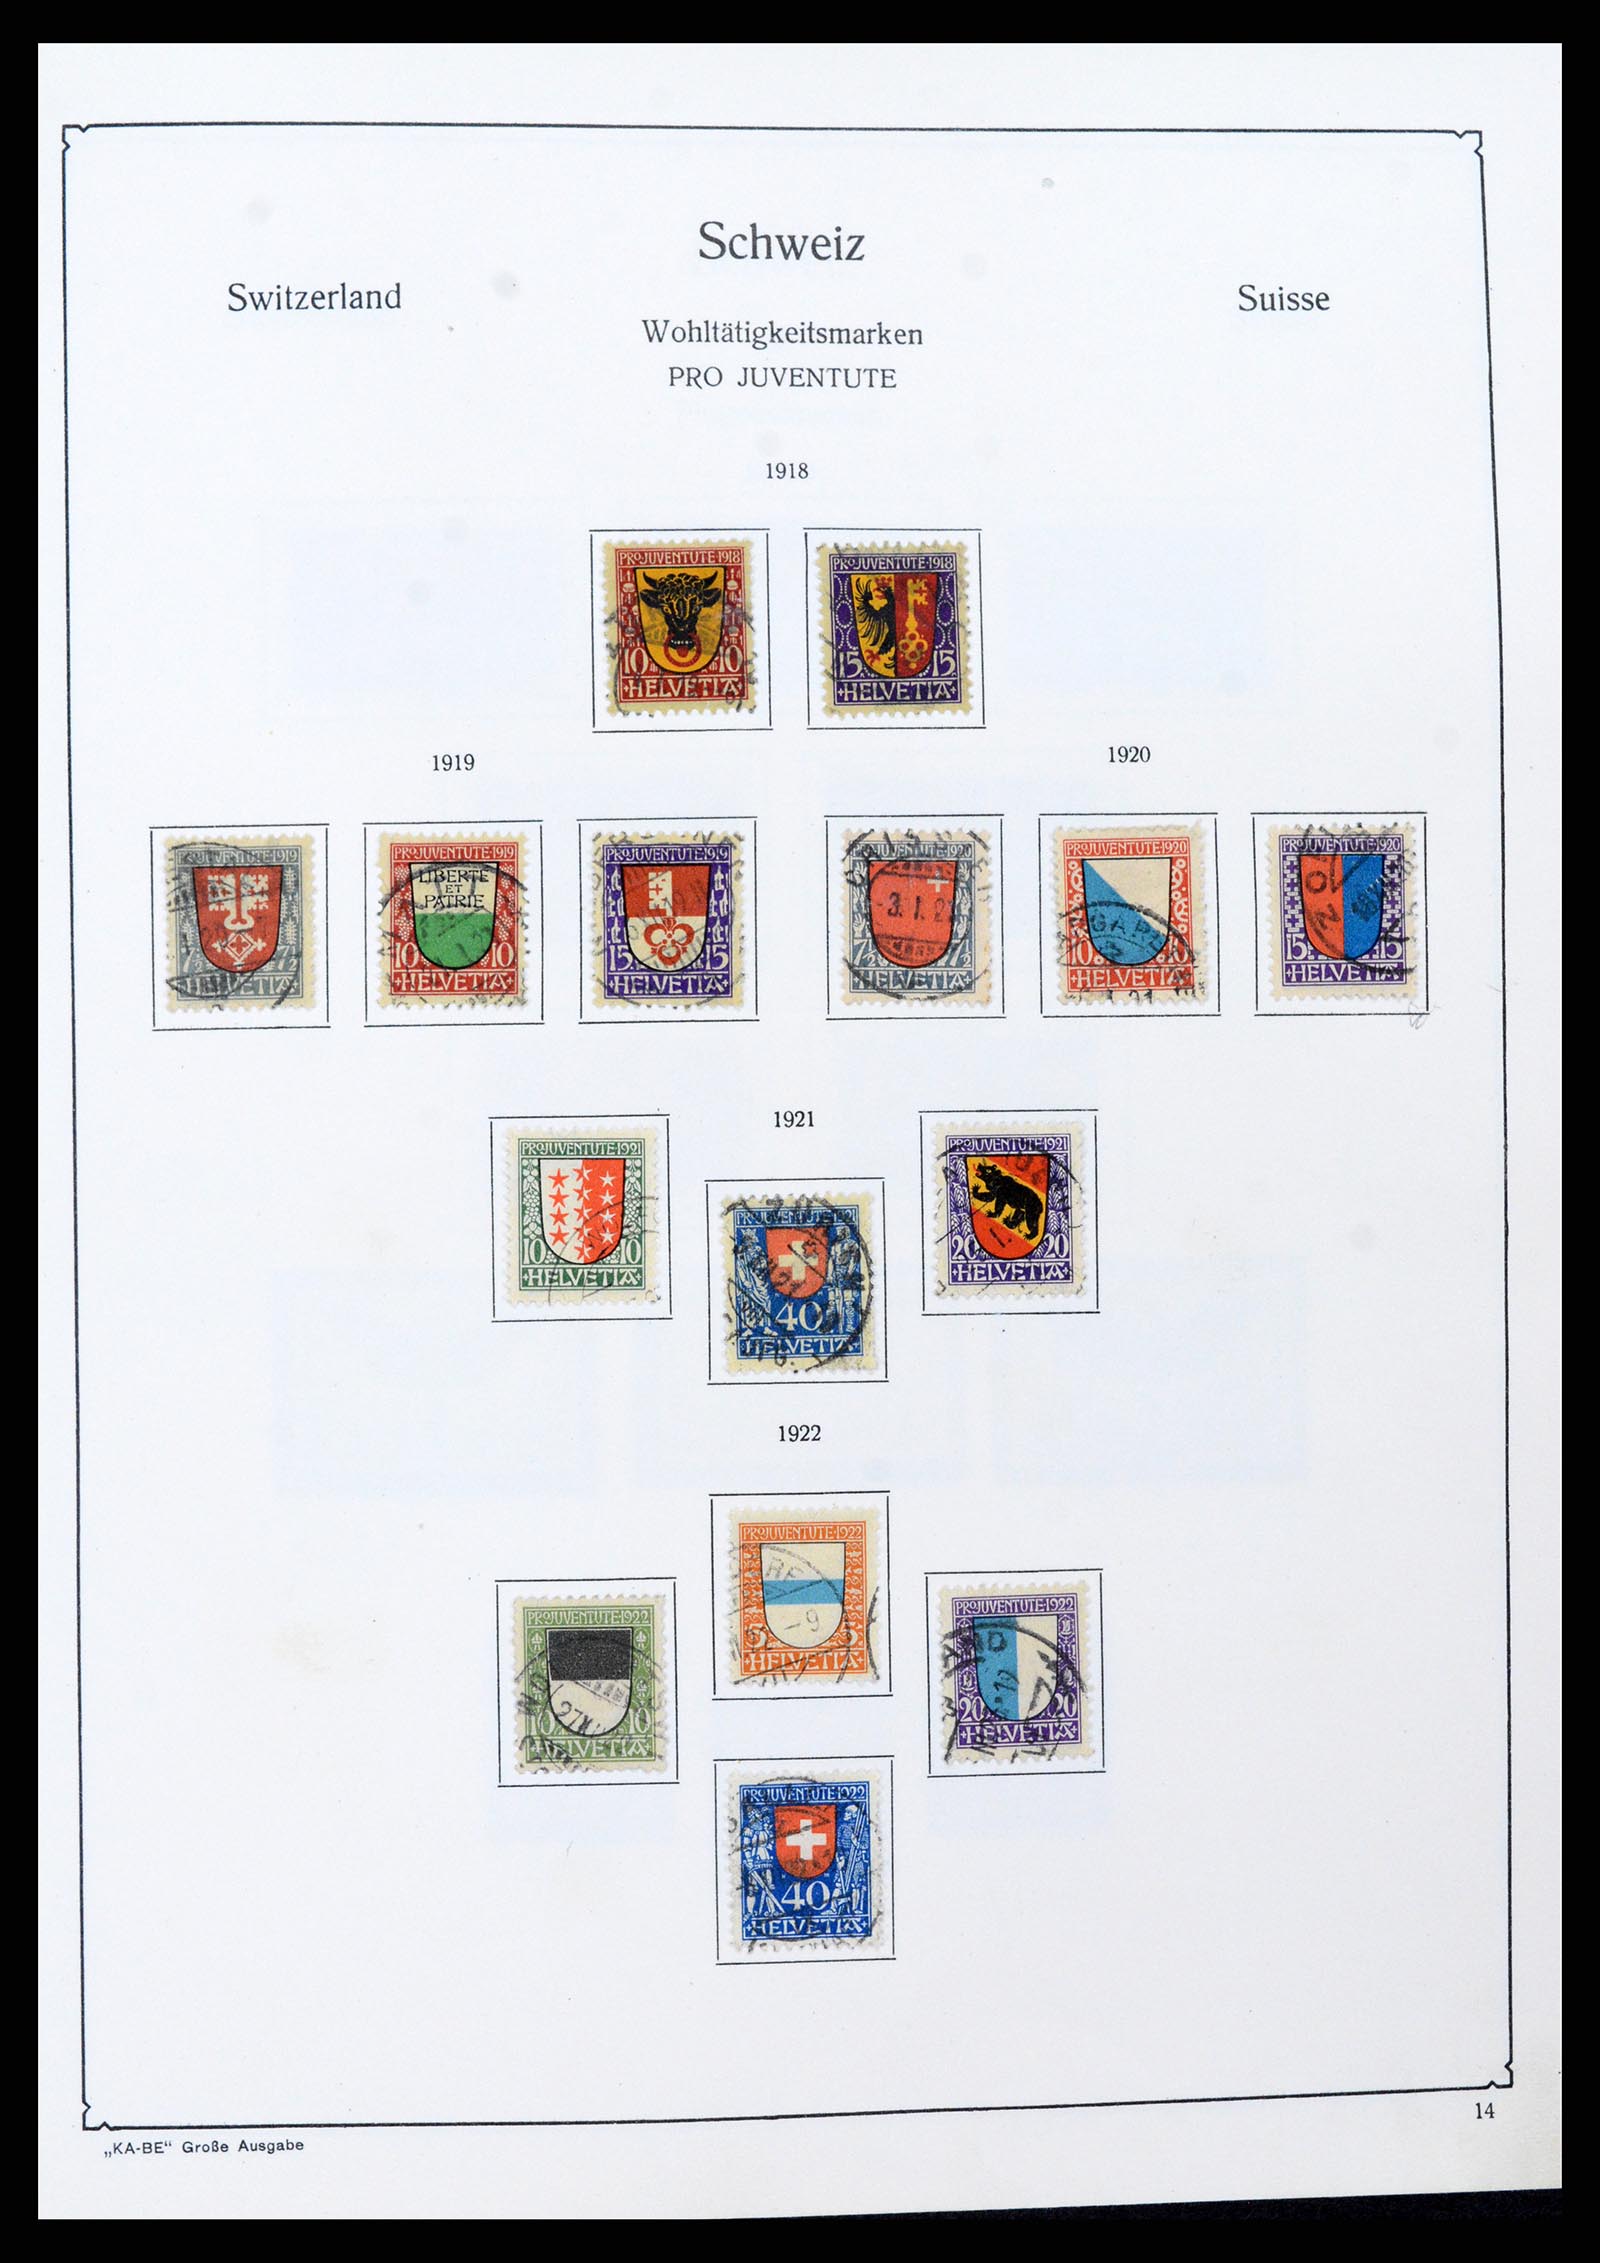 37588 013 - Stamp collection 37588 Switzerland 1854-1974.